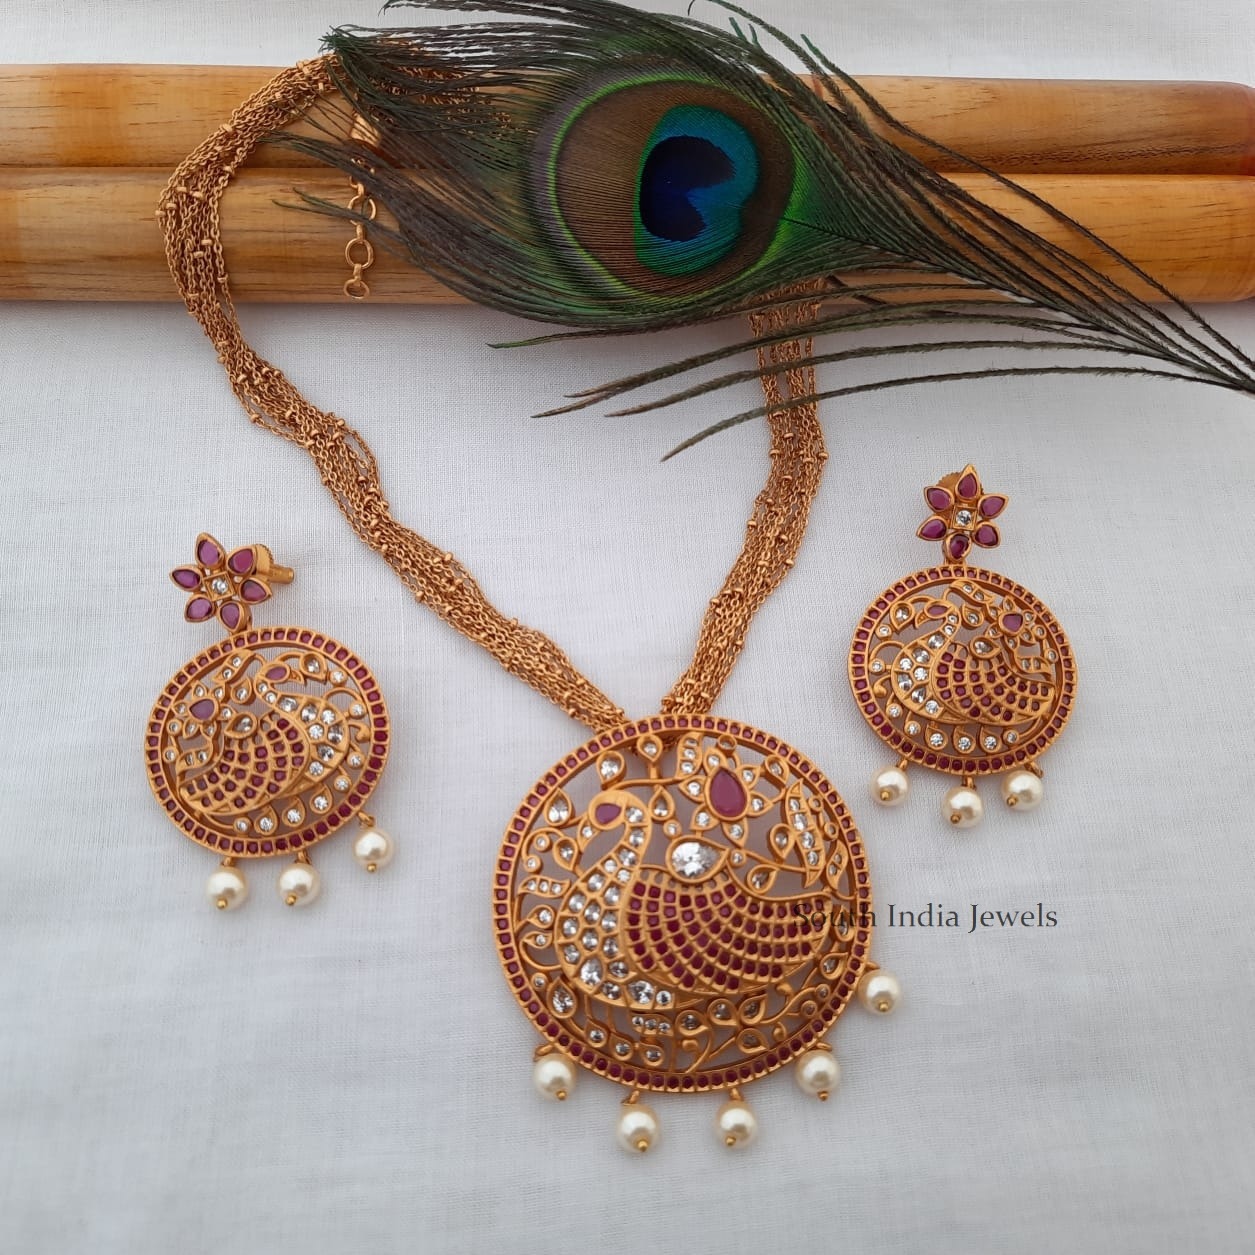 Gorgeous Peacock Pendant Necklace